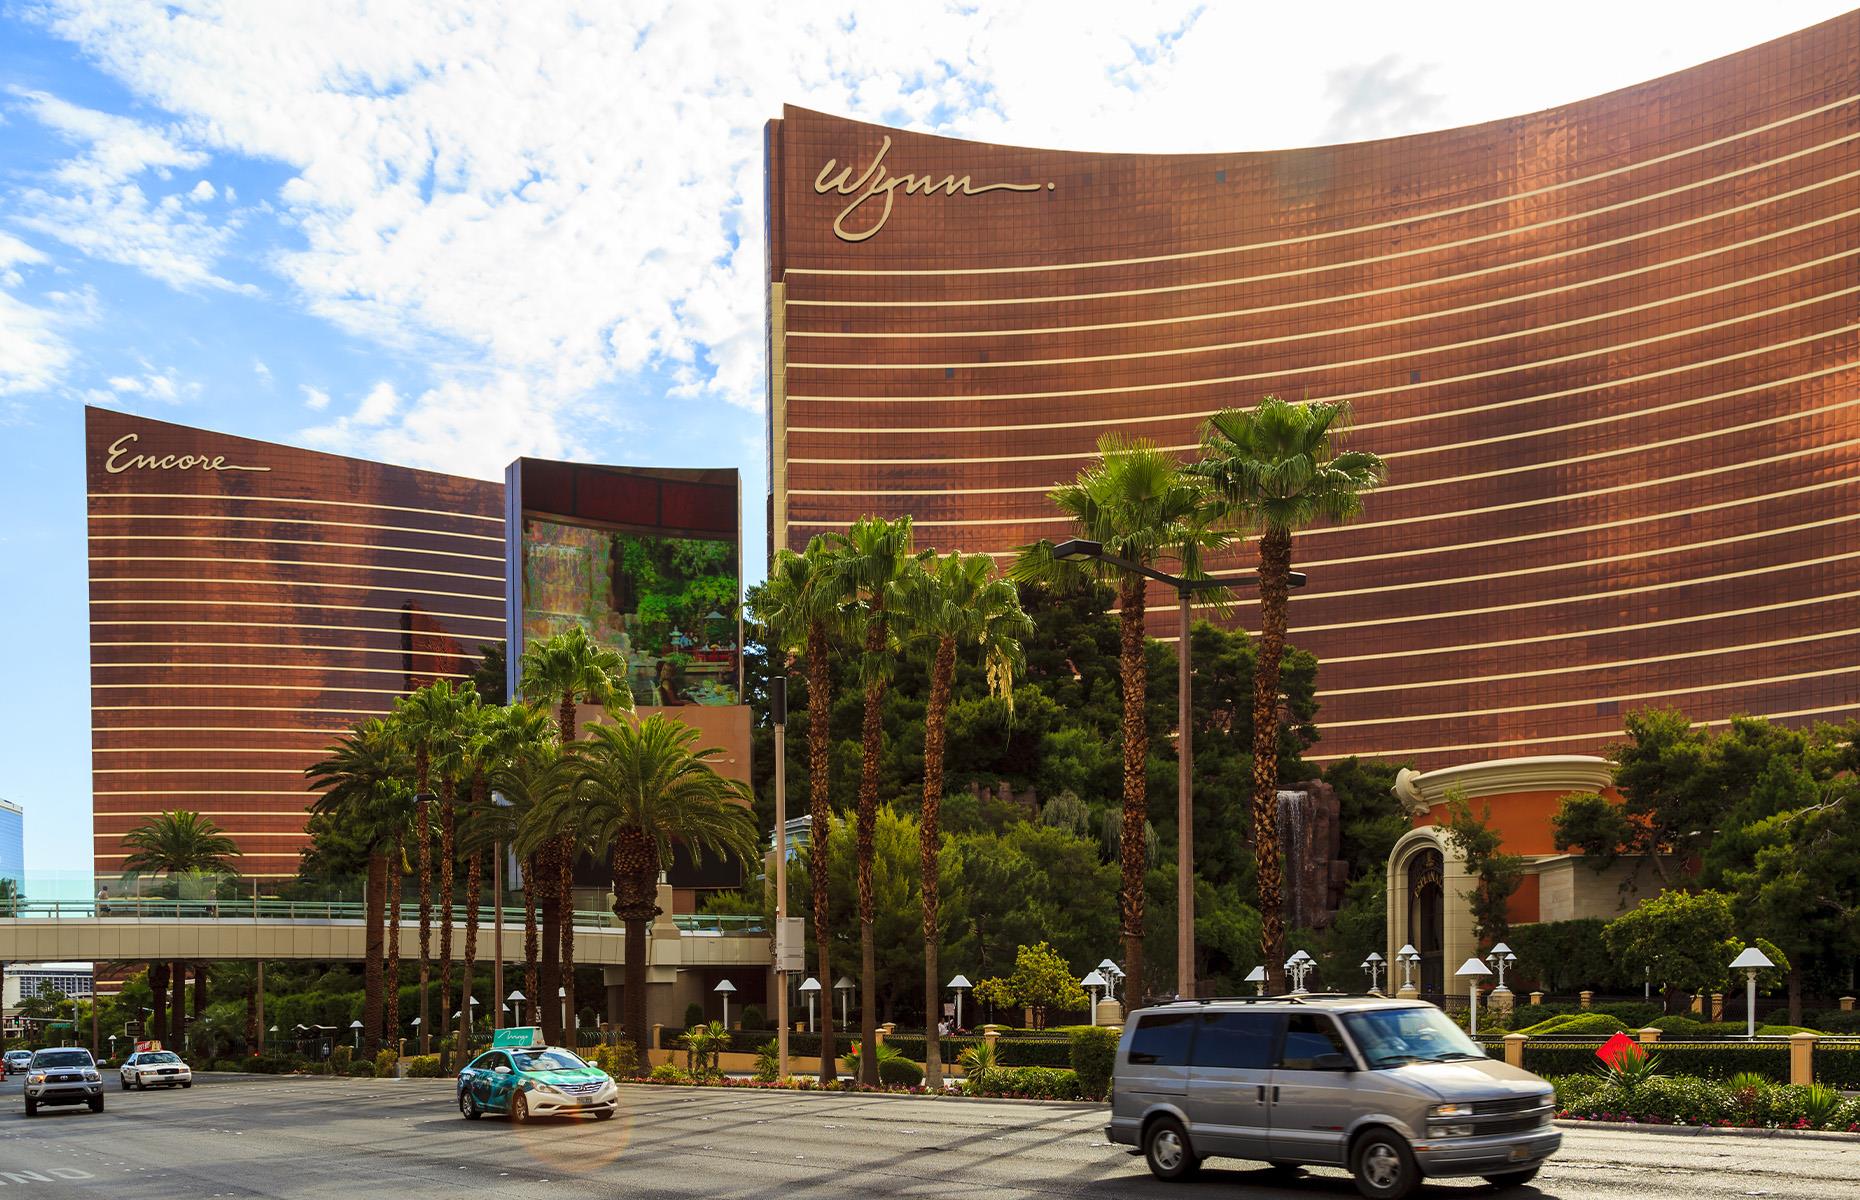 Wynn Las Vegas, $3.6 billion (£2.8bn) 